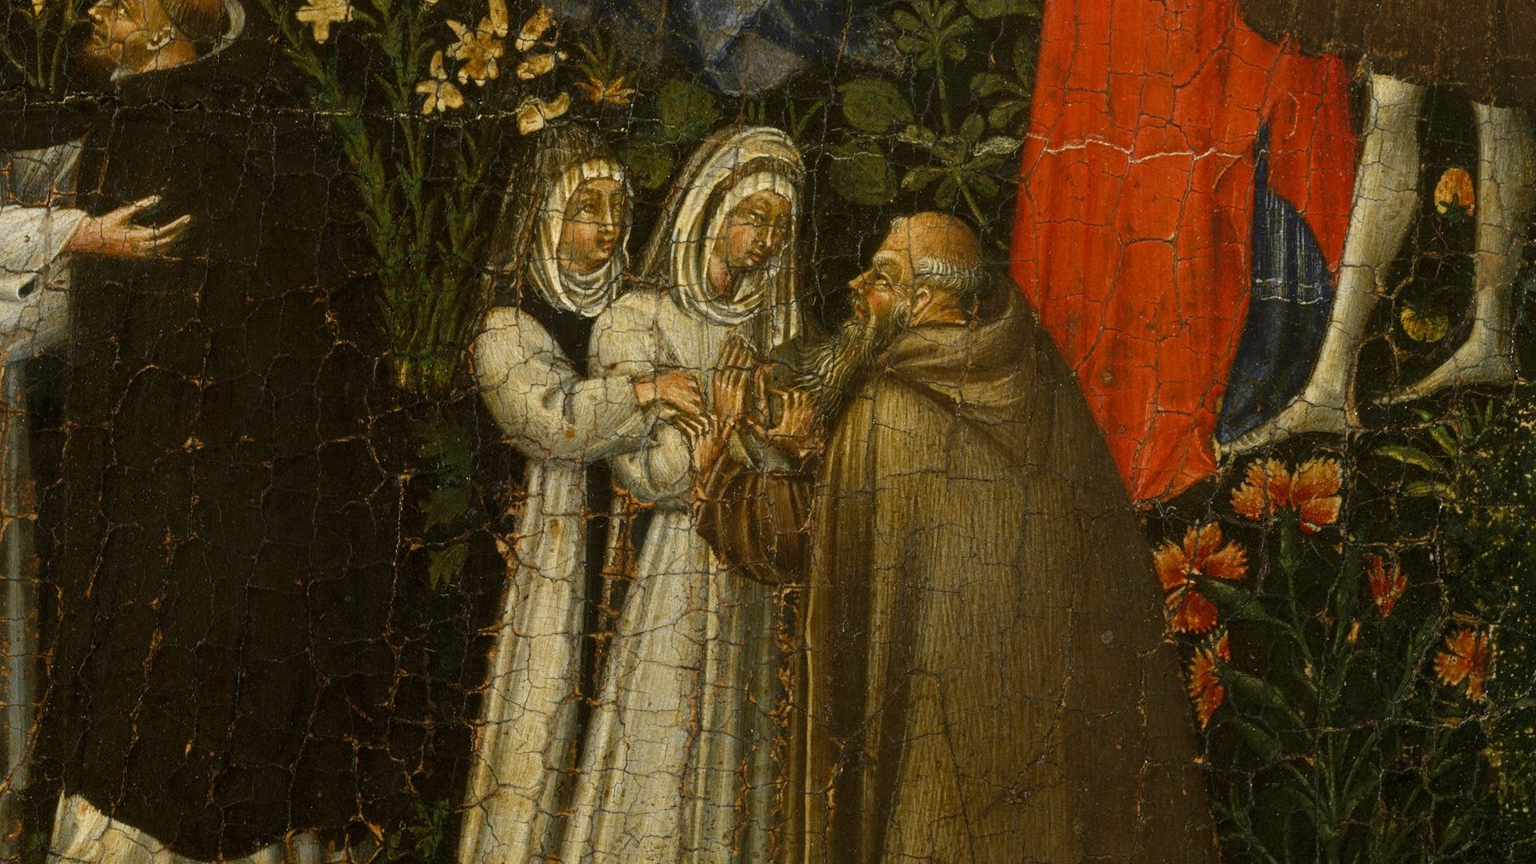 Nuns in Renaissance Italy